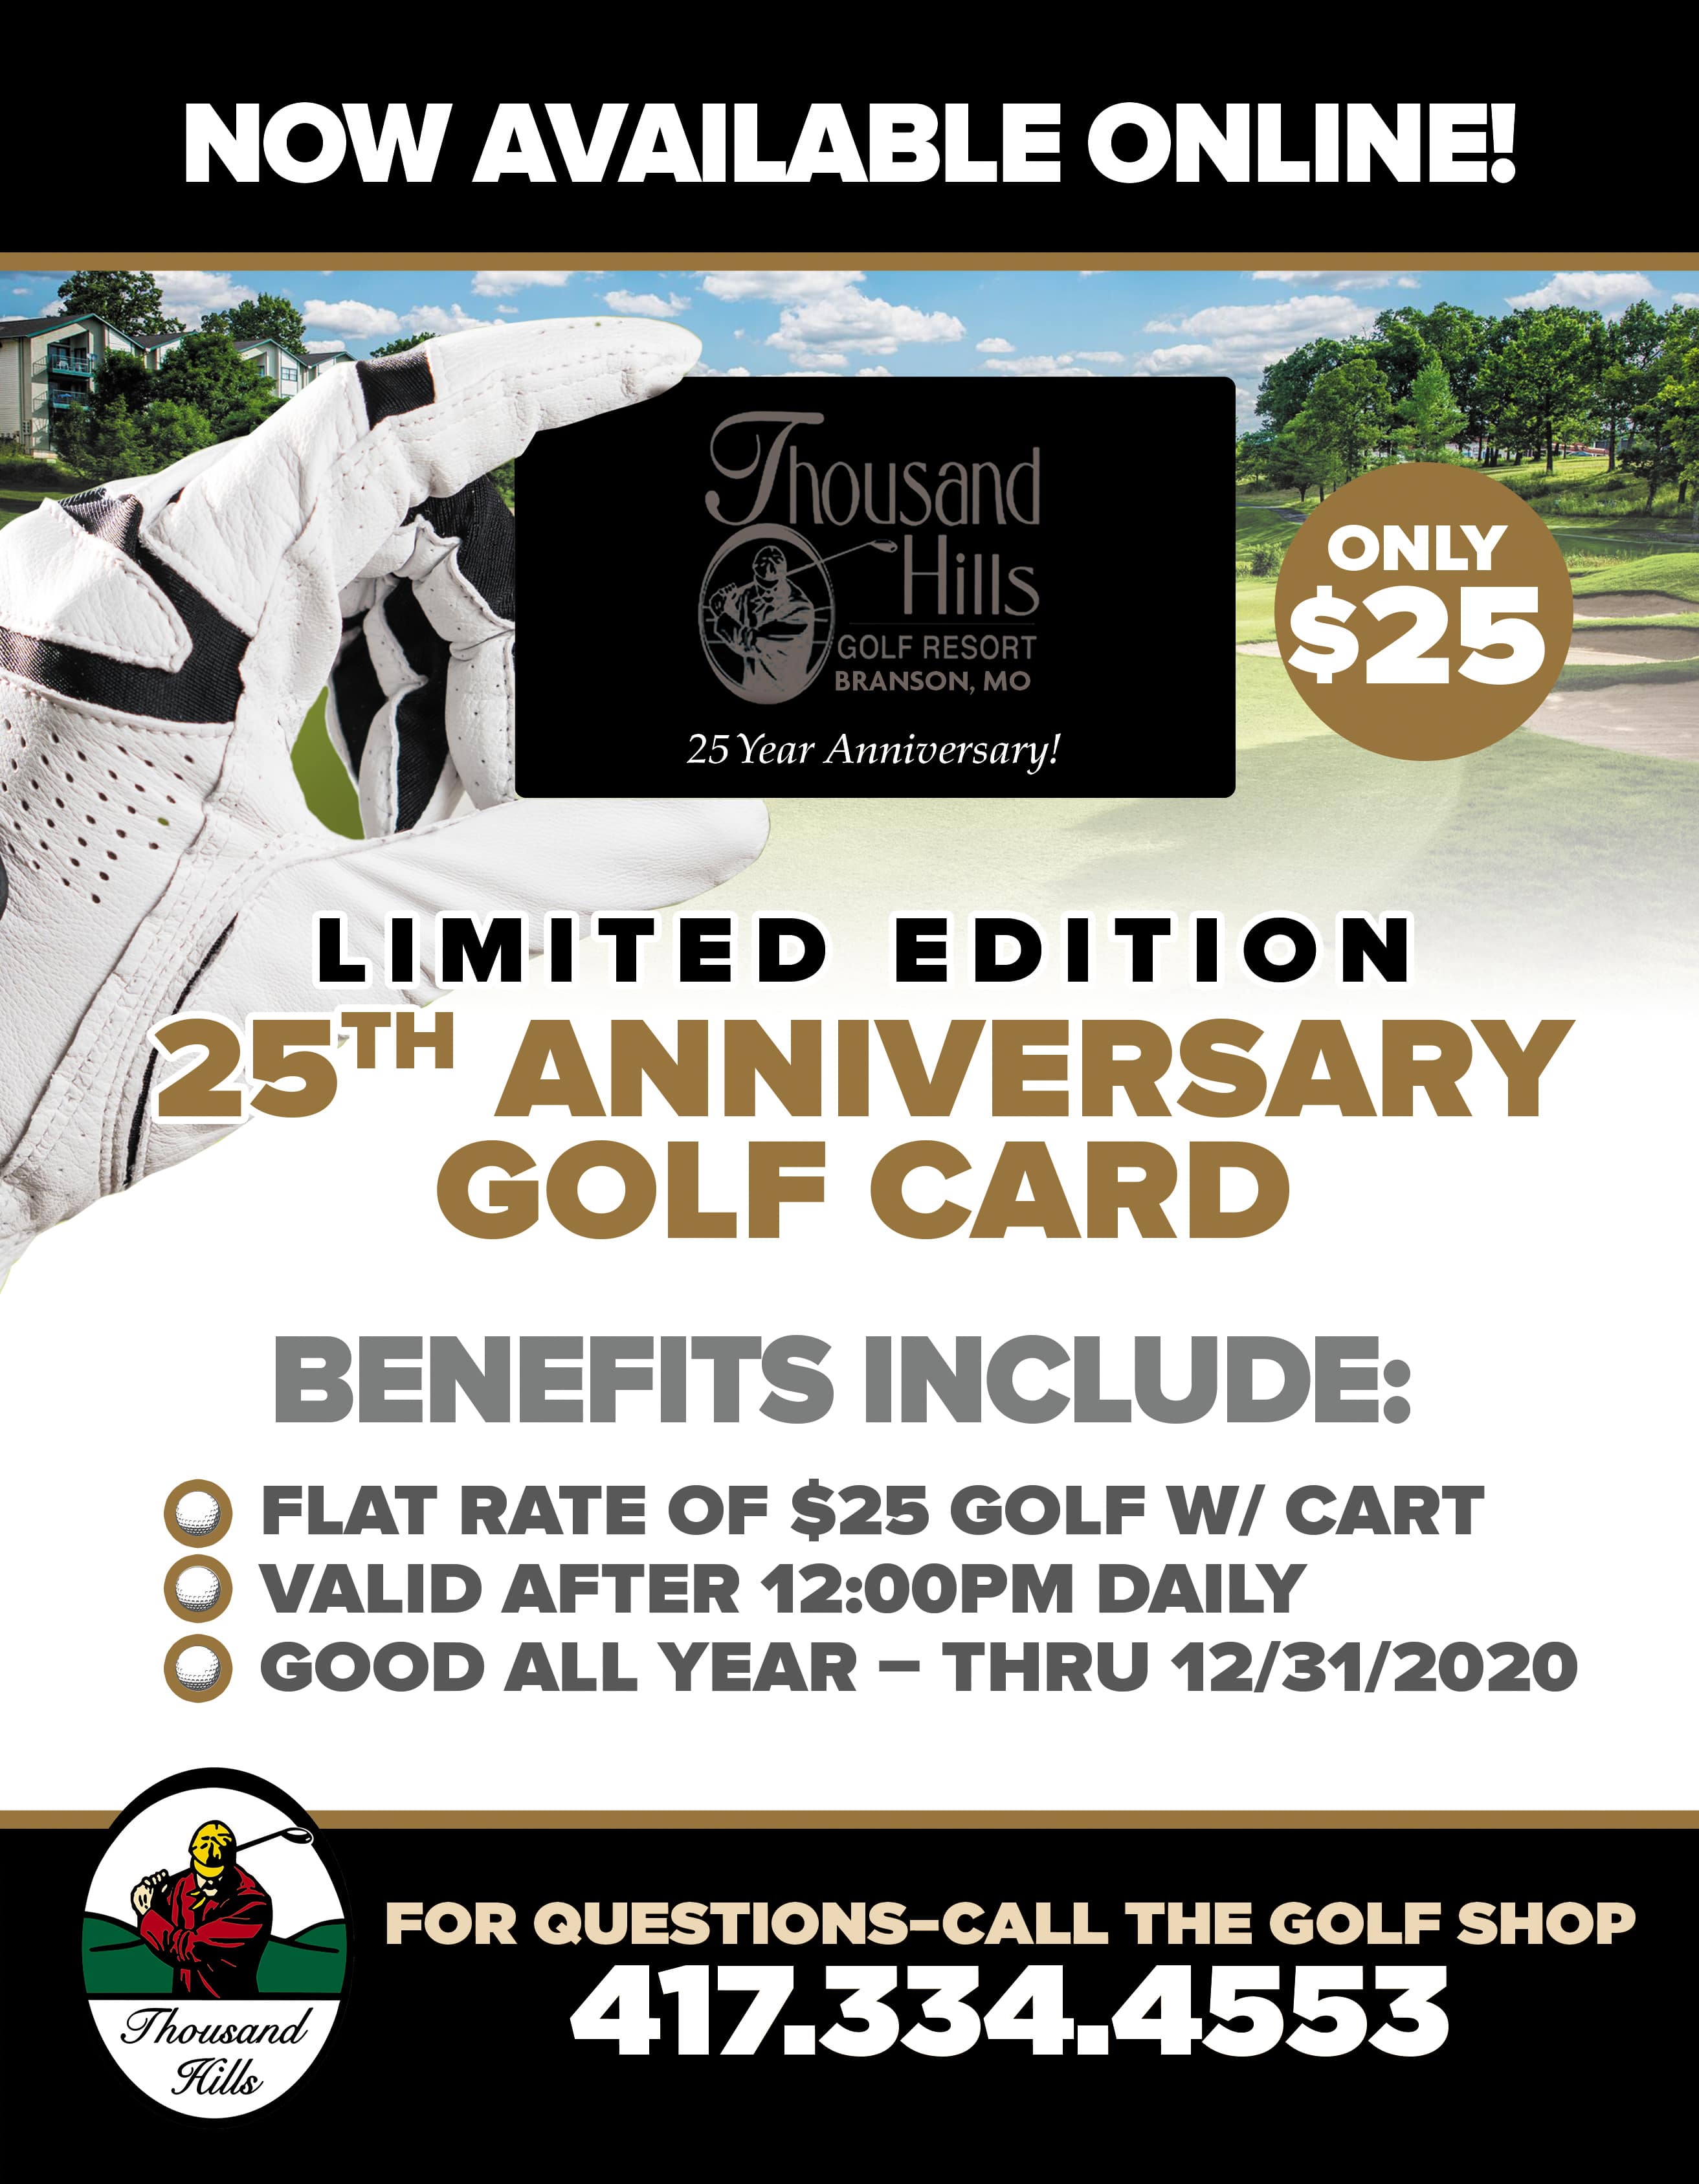 25th Anniversary Golf Card at Thousand Hills